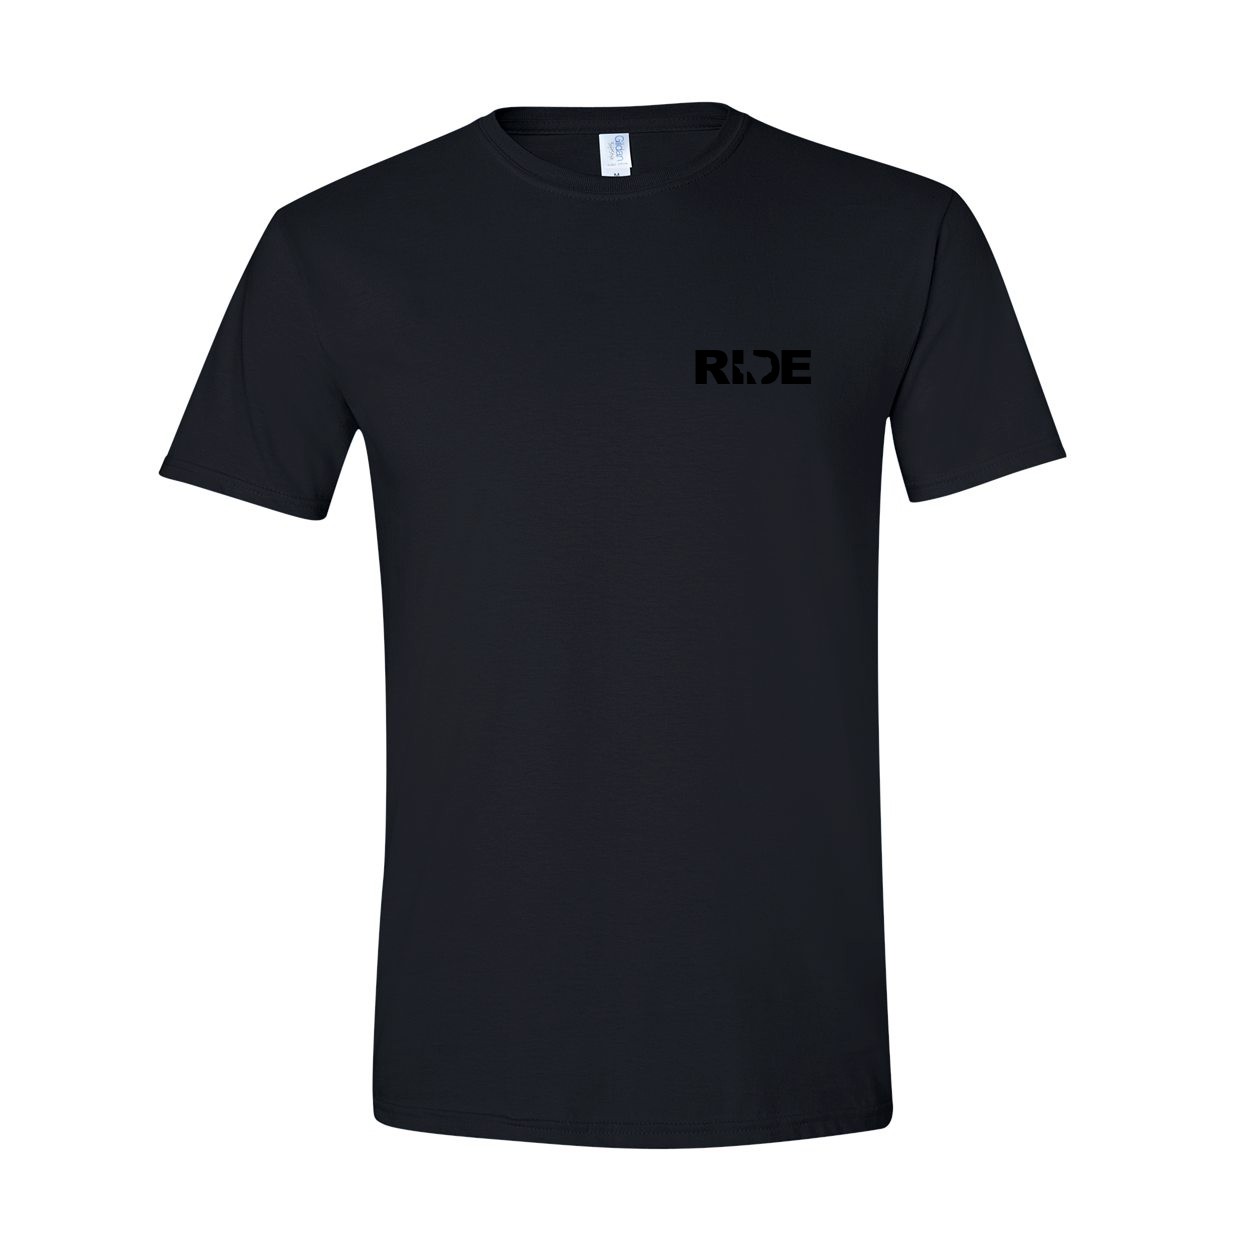 Ride Texas Night Out T-Shirt Black (Black Logo)